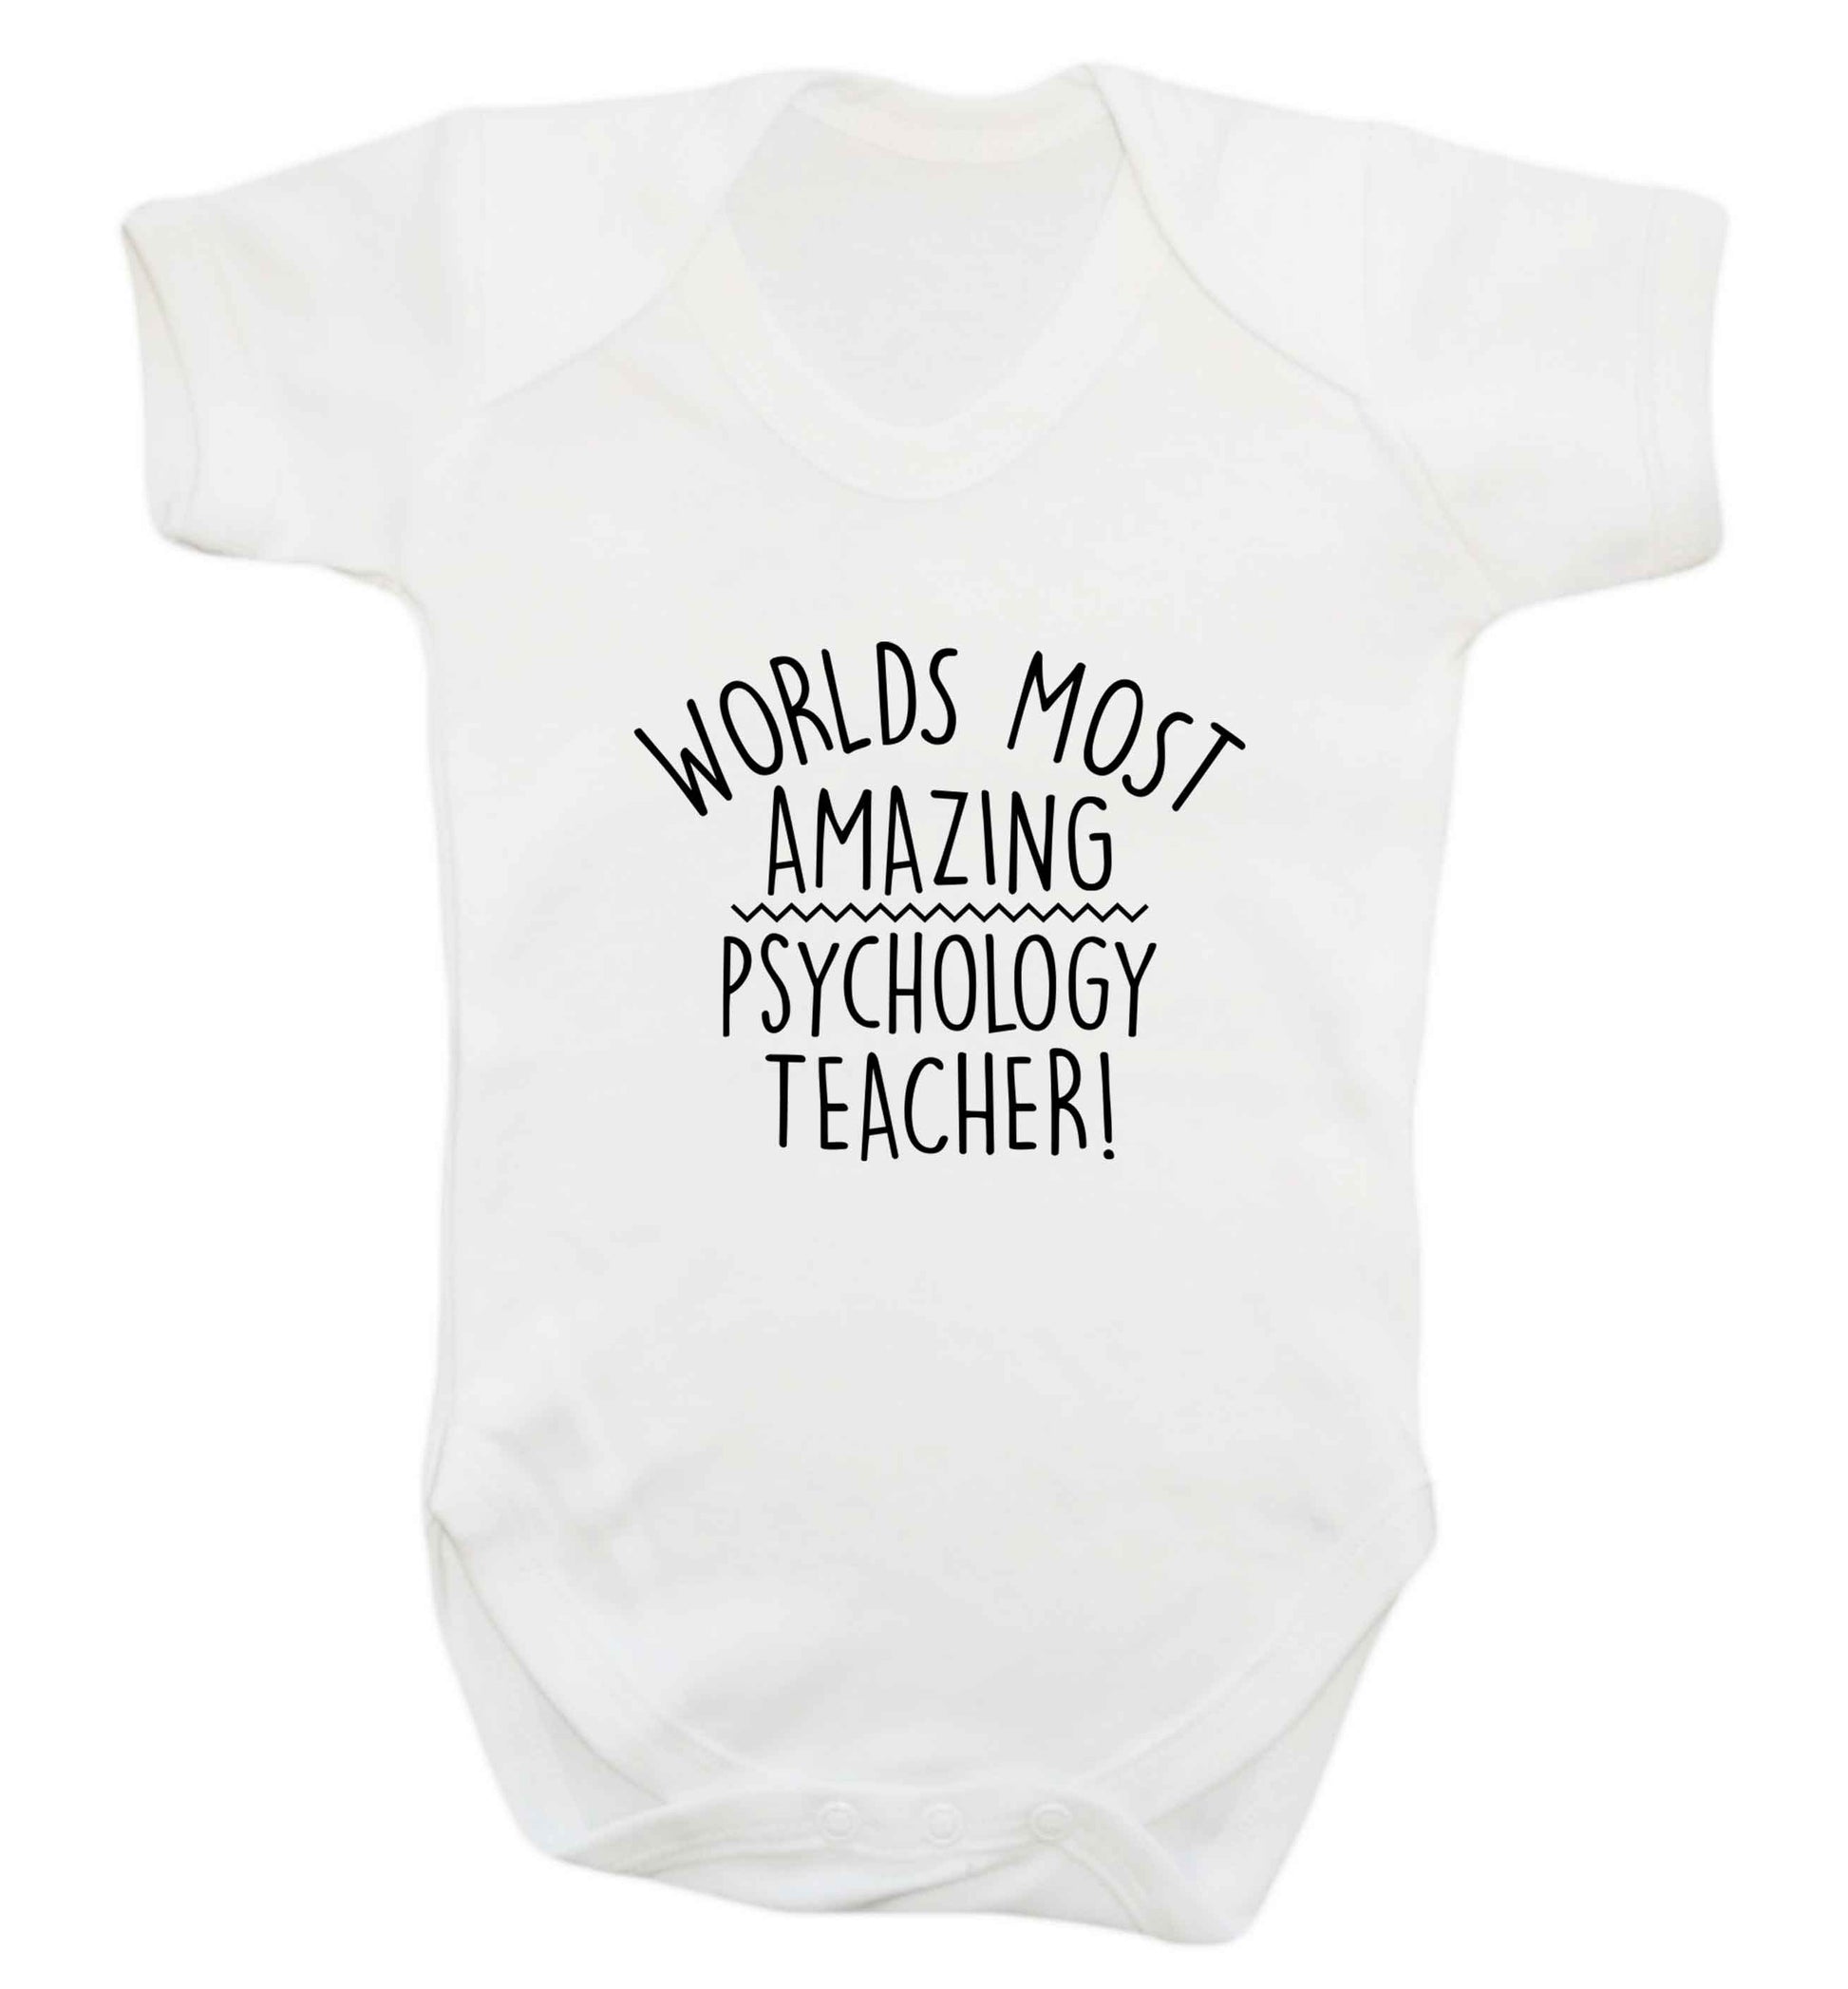 Worlds most amazing psychology teacher baby vest white 18-24 months